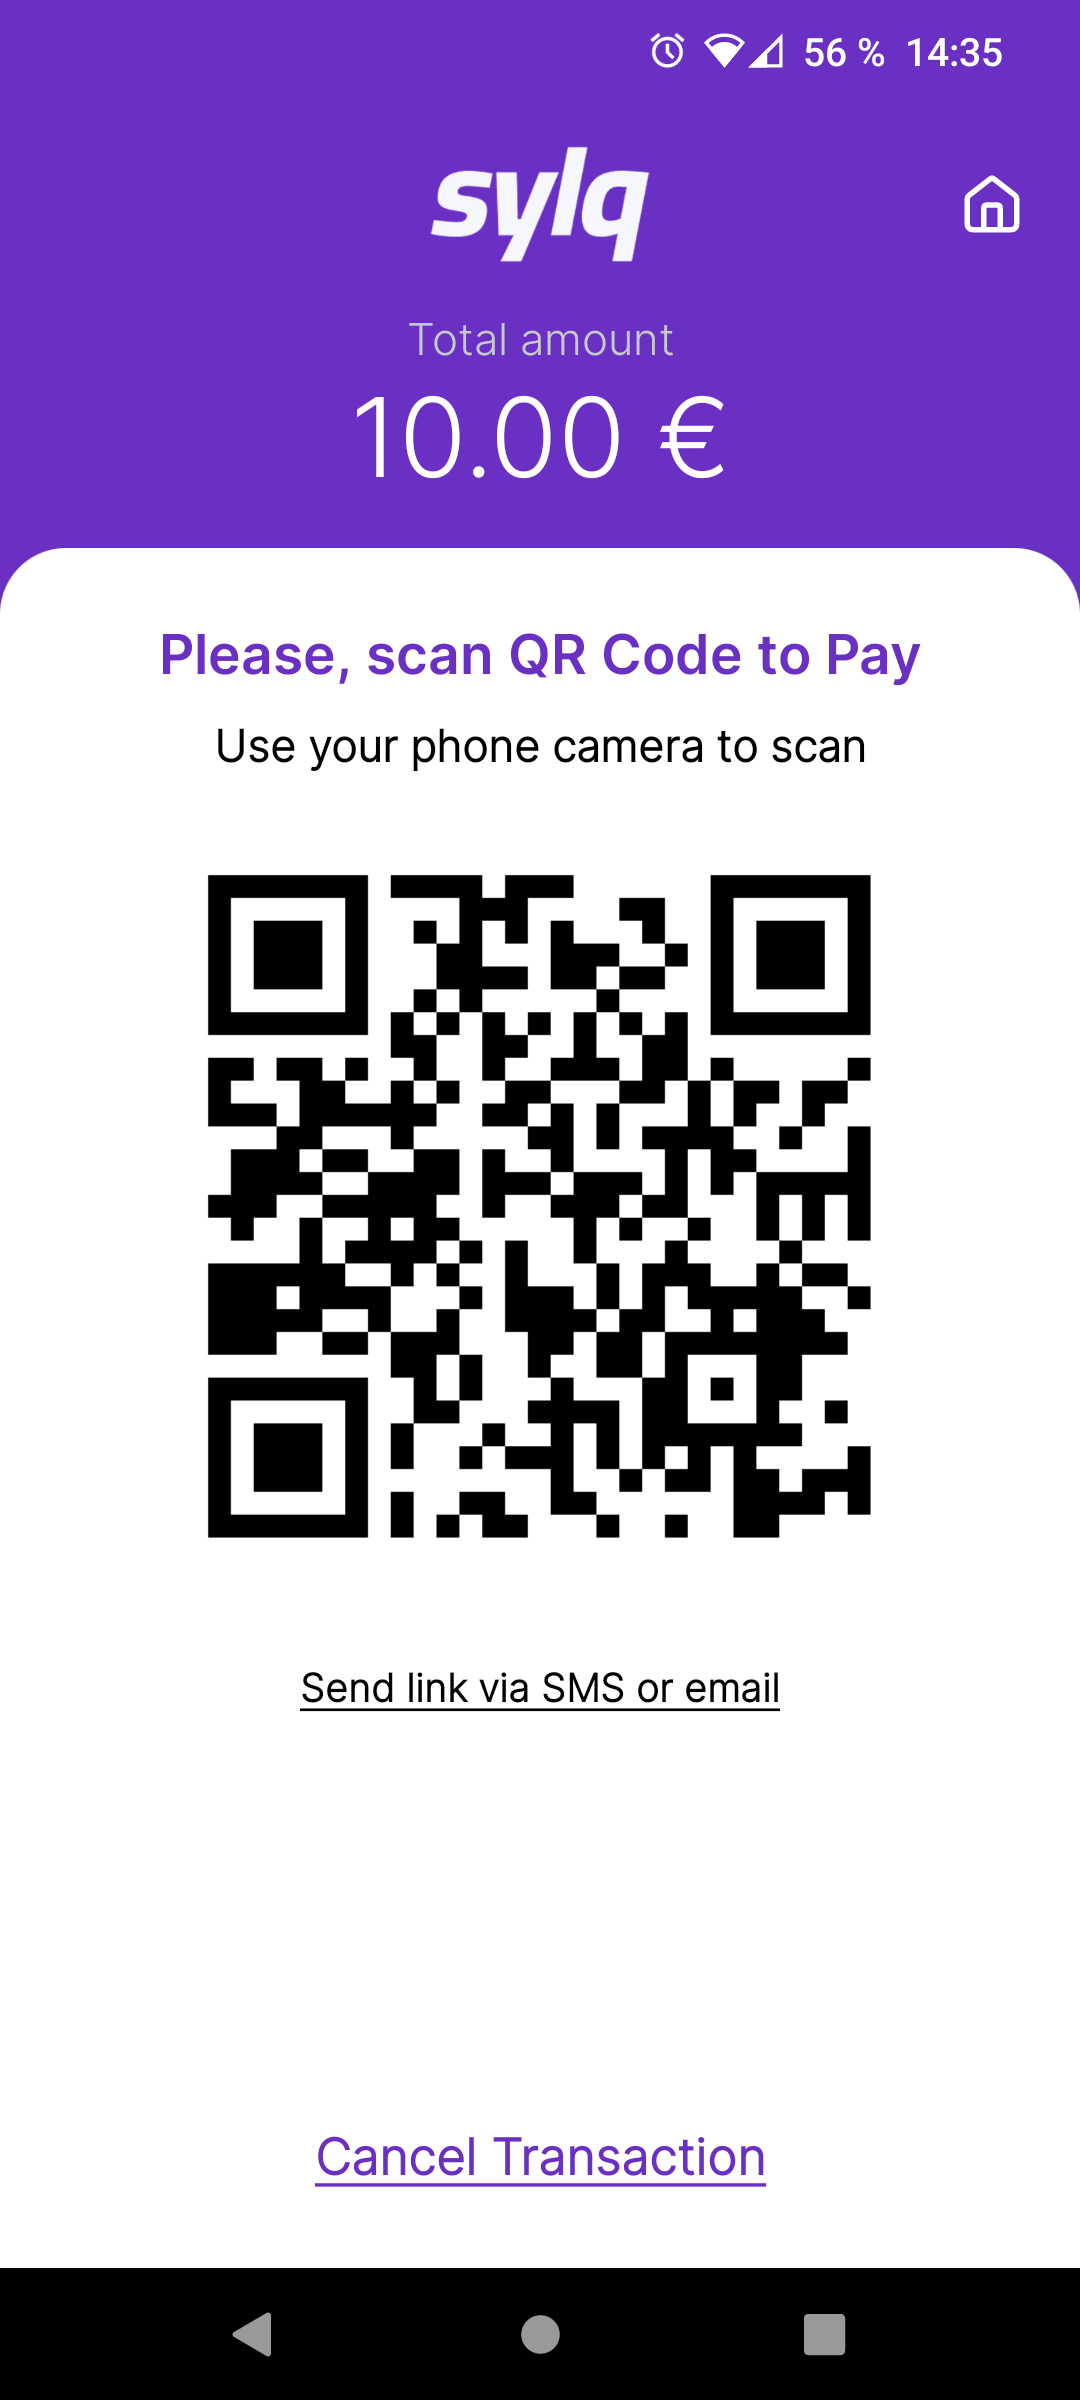 Qori App for Merchants - Scan QR Code to pay